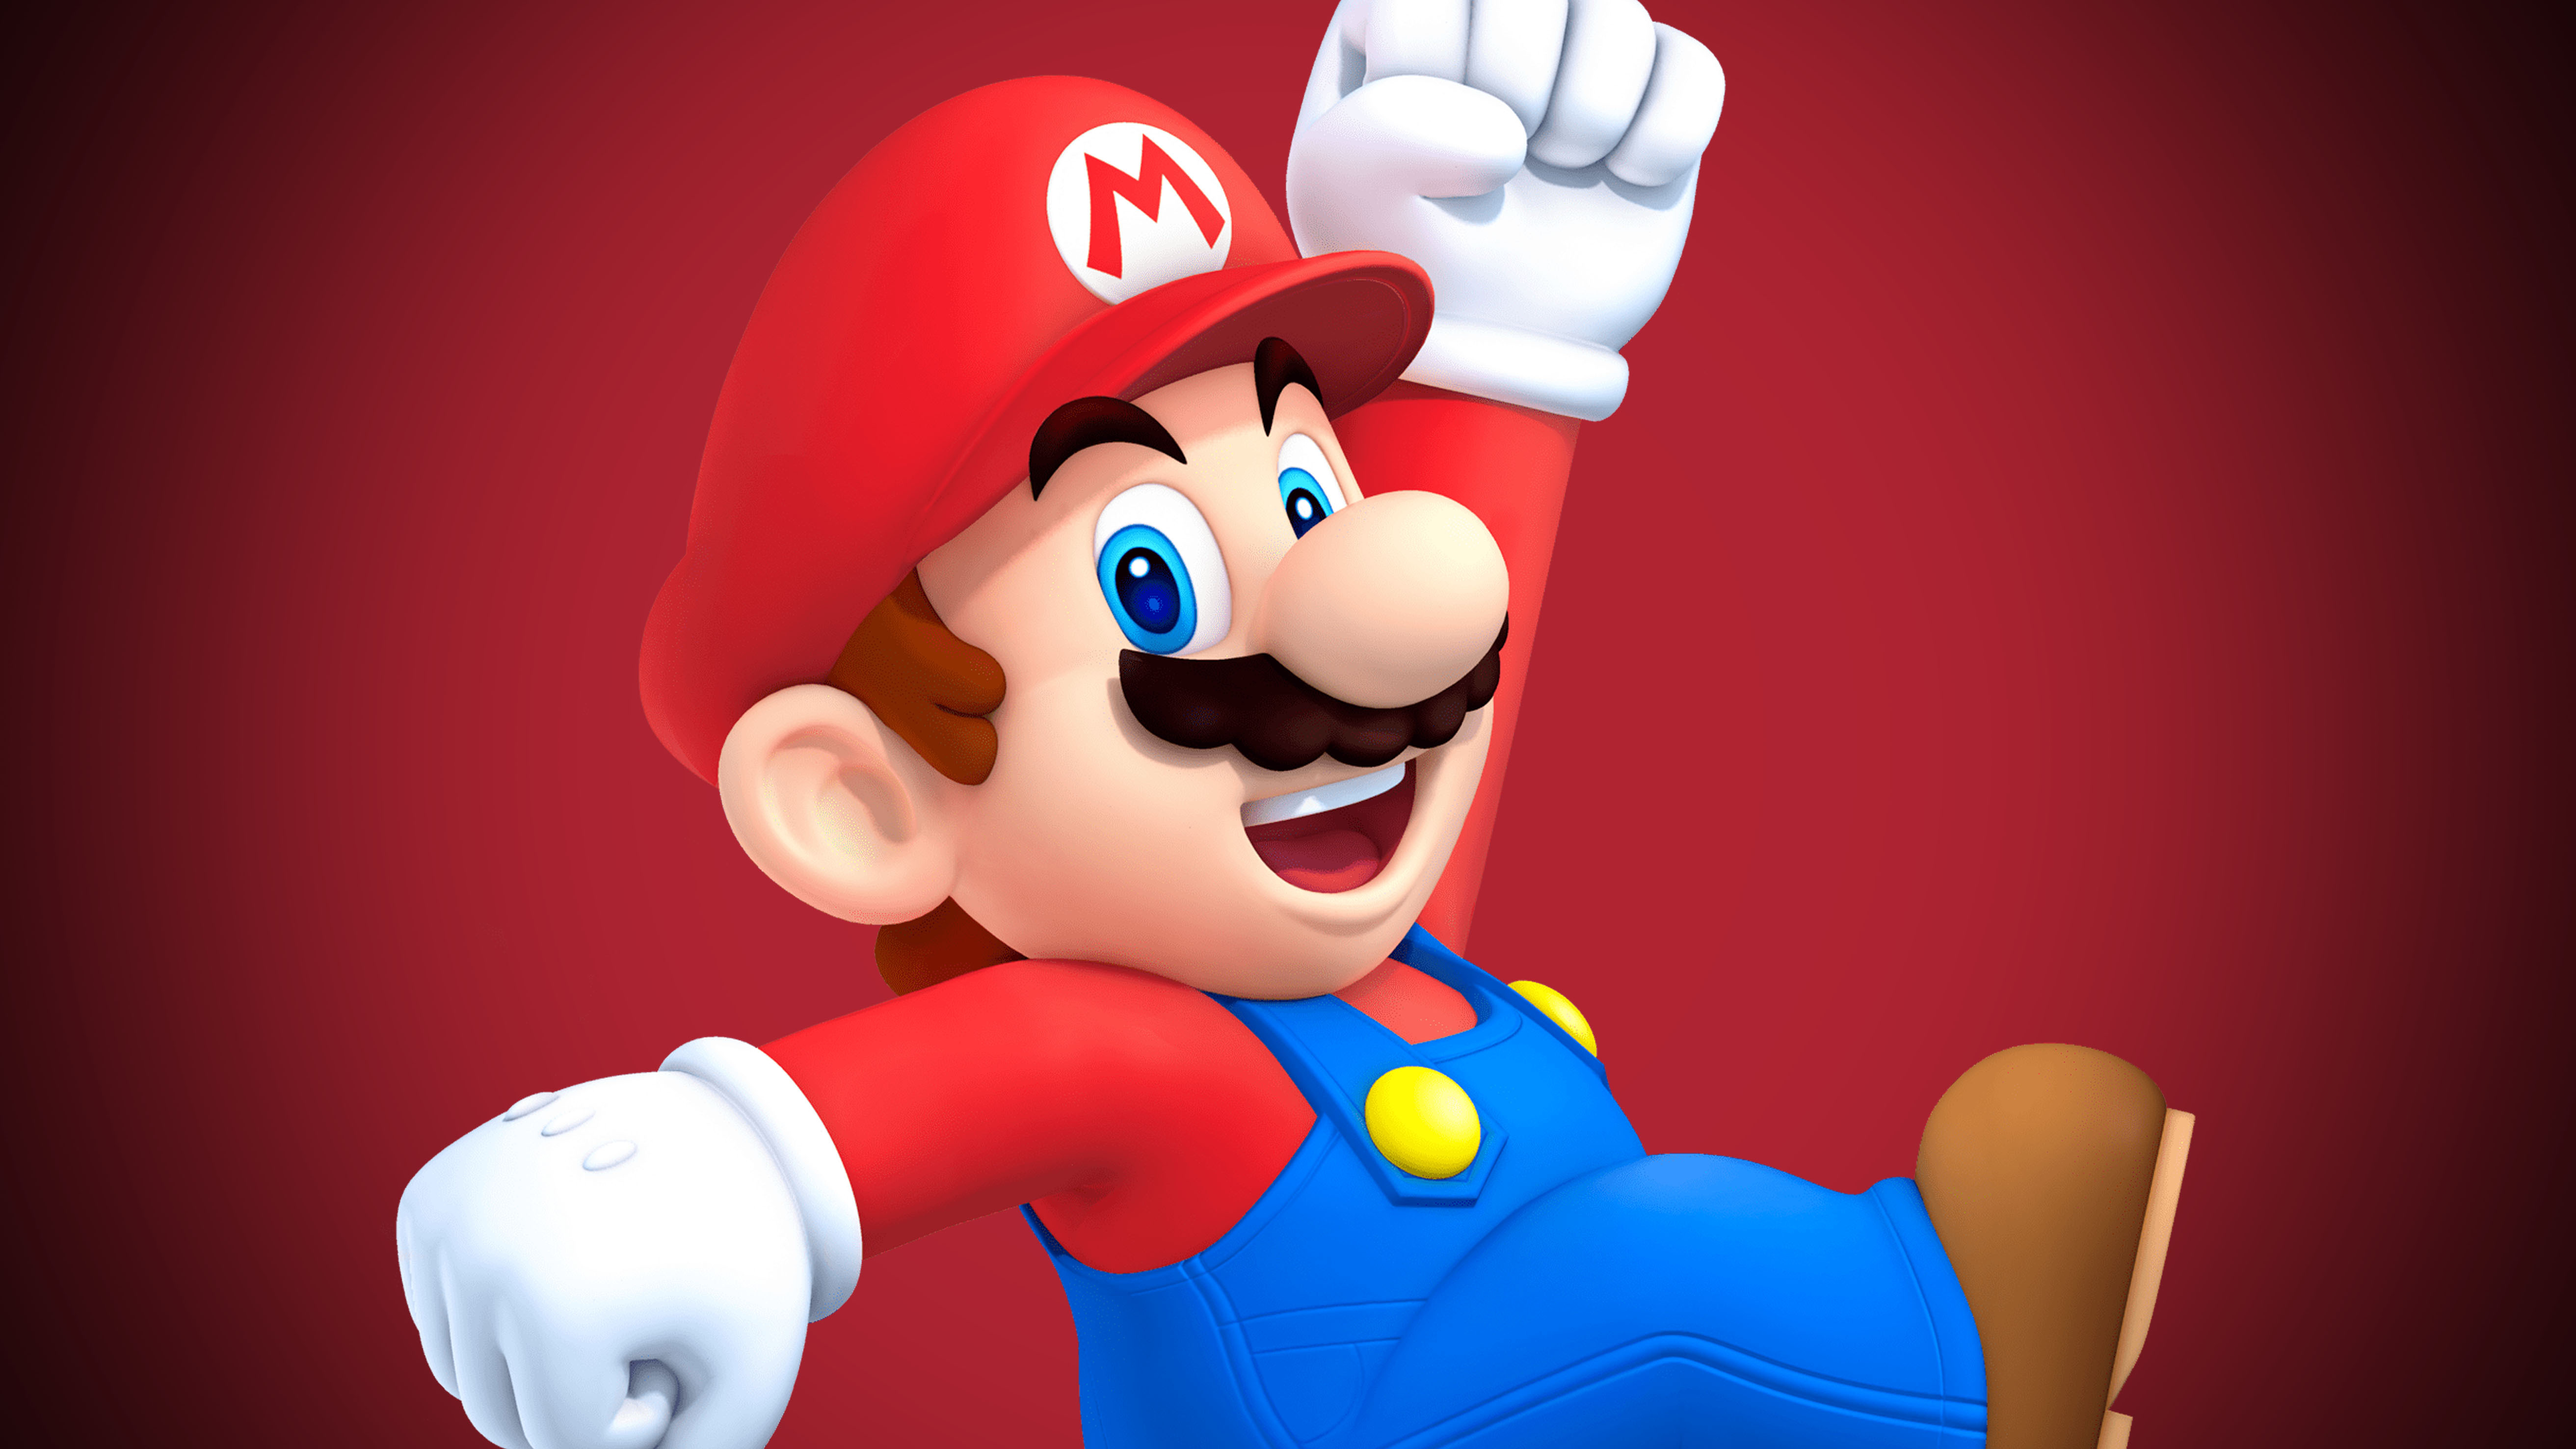 Nintendo announces Mario Golf, Splatoon 3, Fall Guys & more new